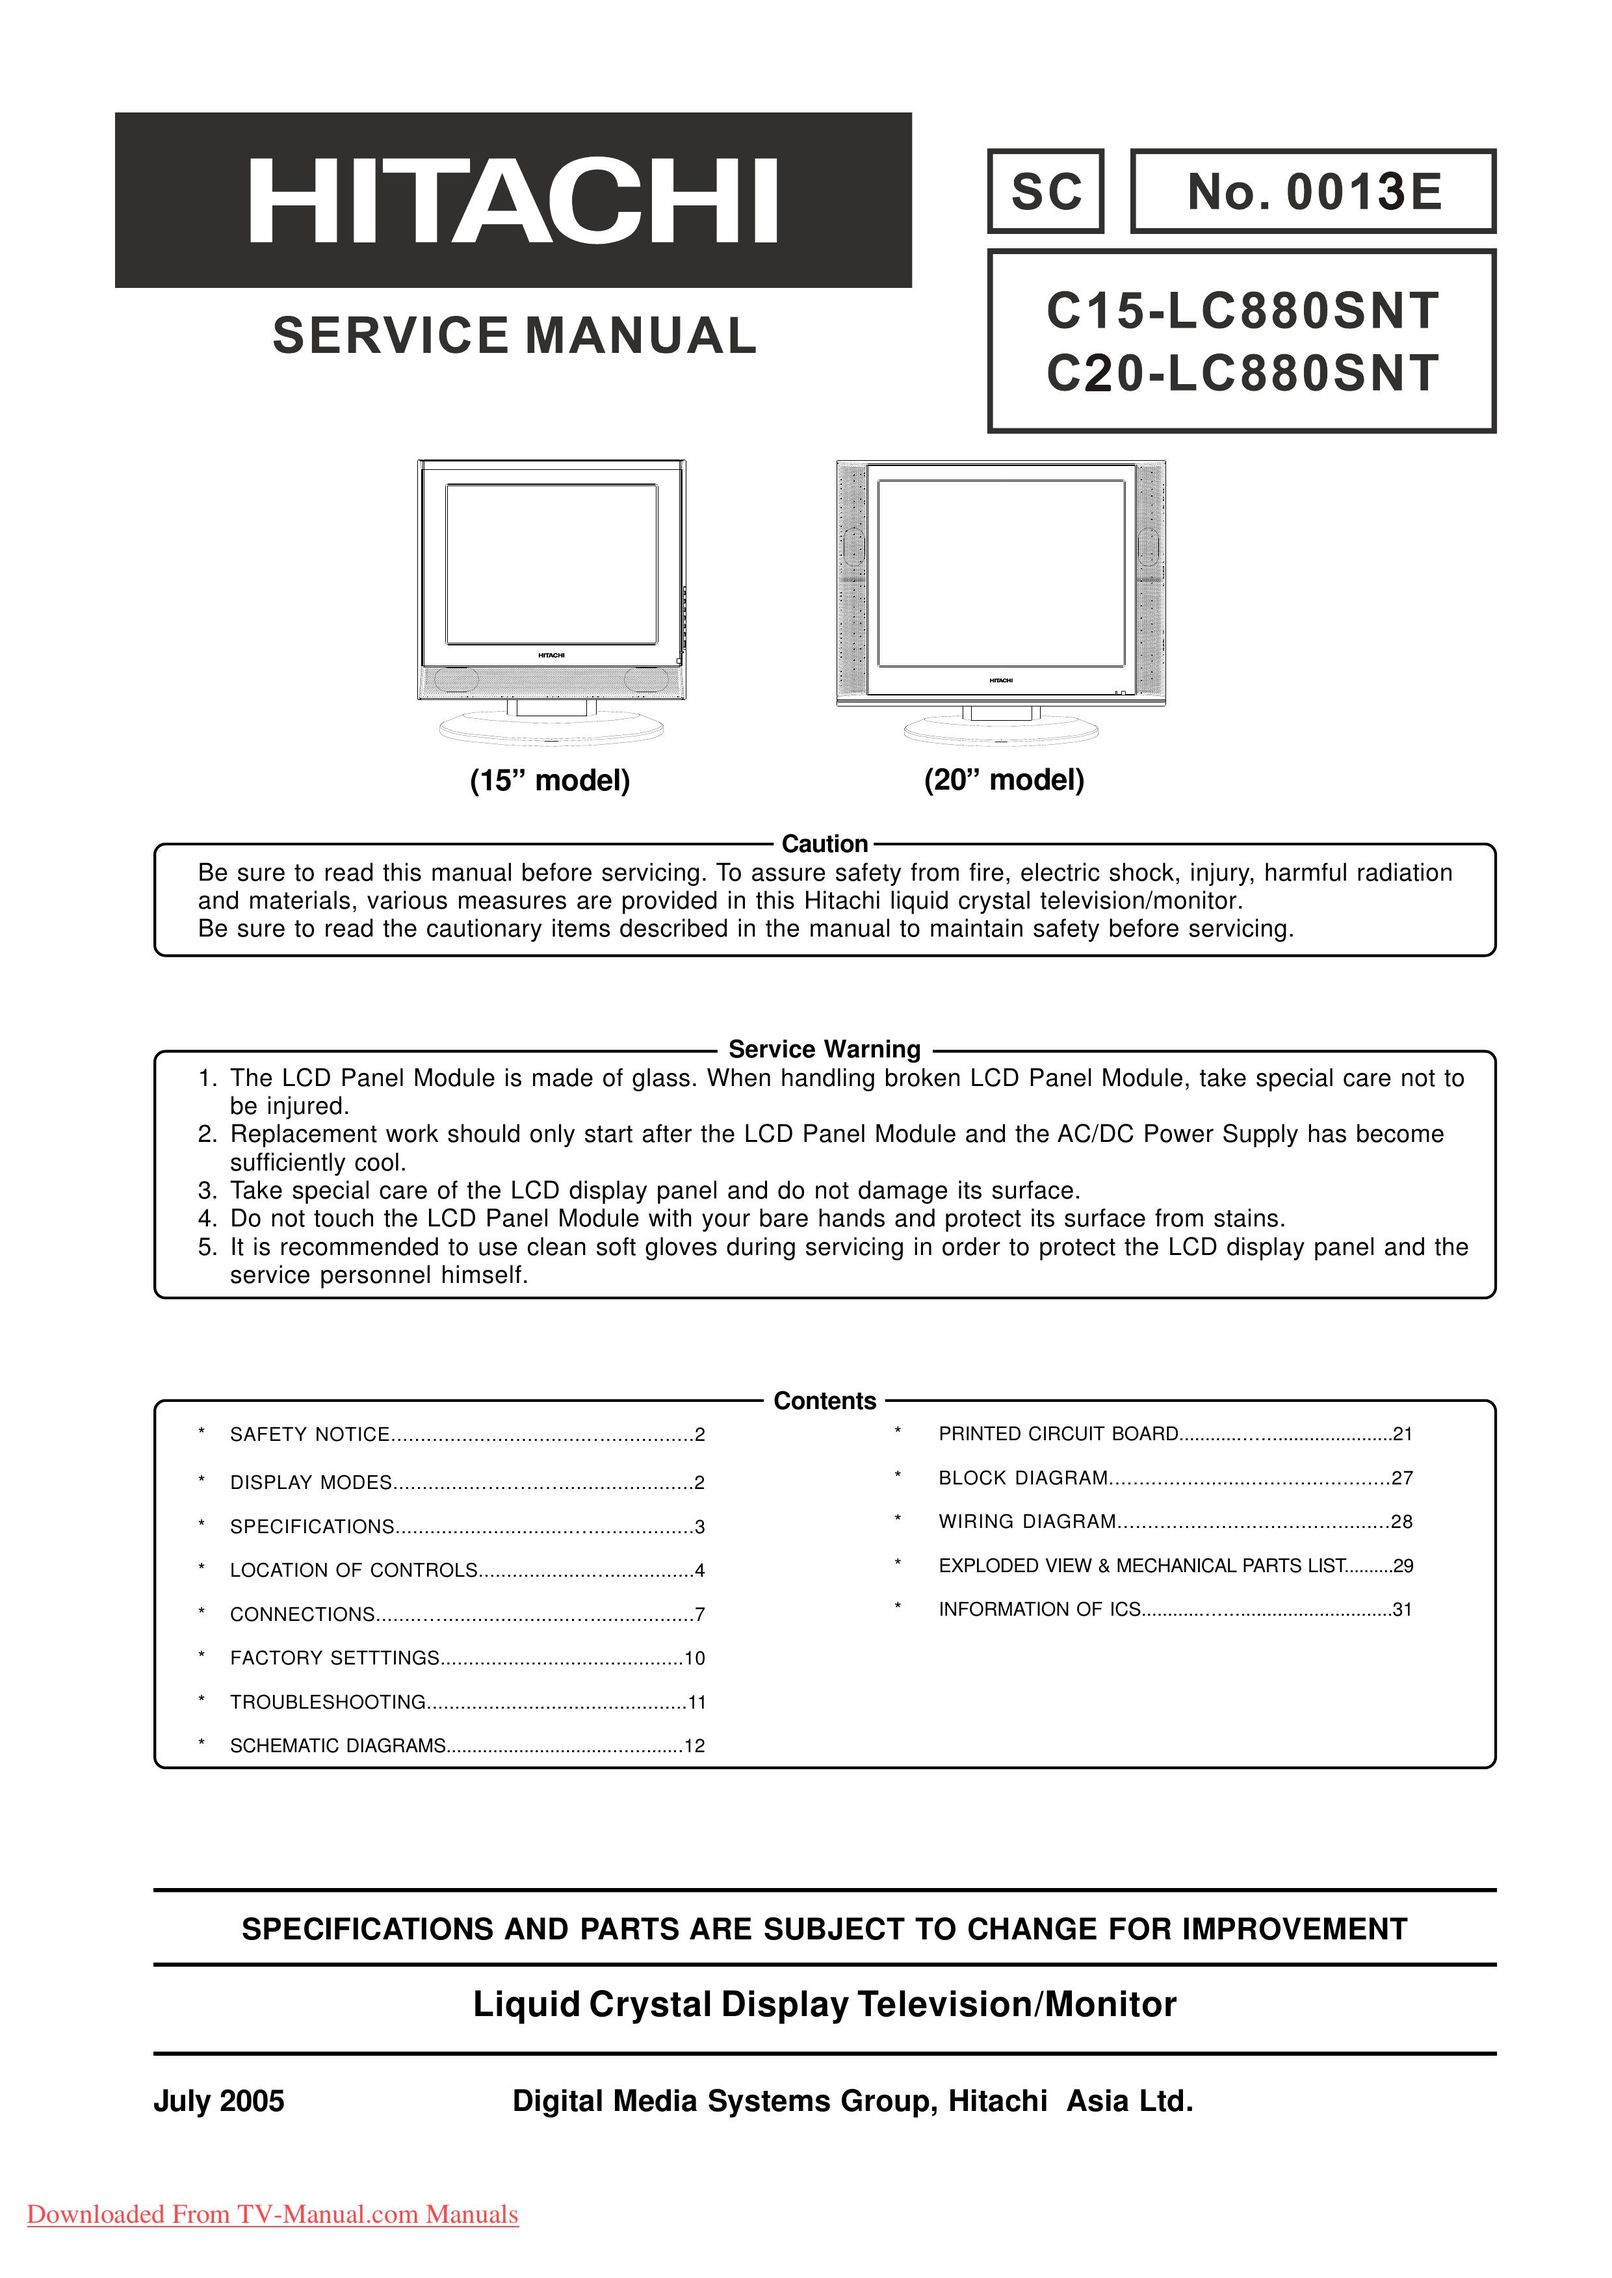 Hitachi C20-LC880SNT Model Vehicle User Manual